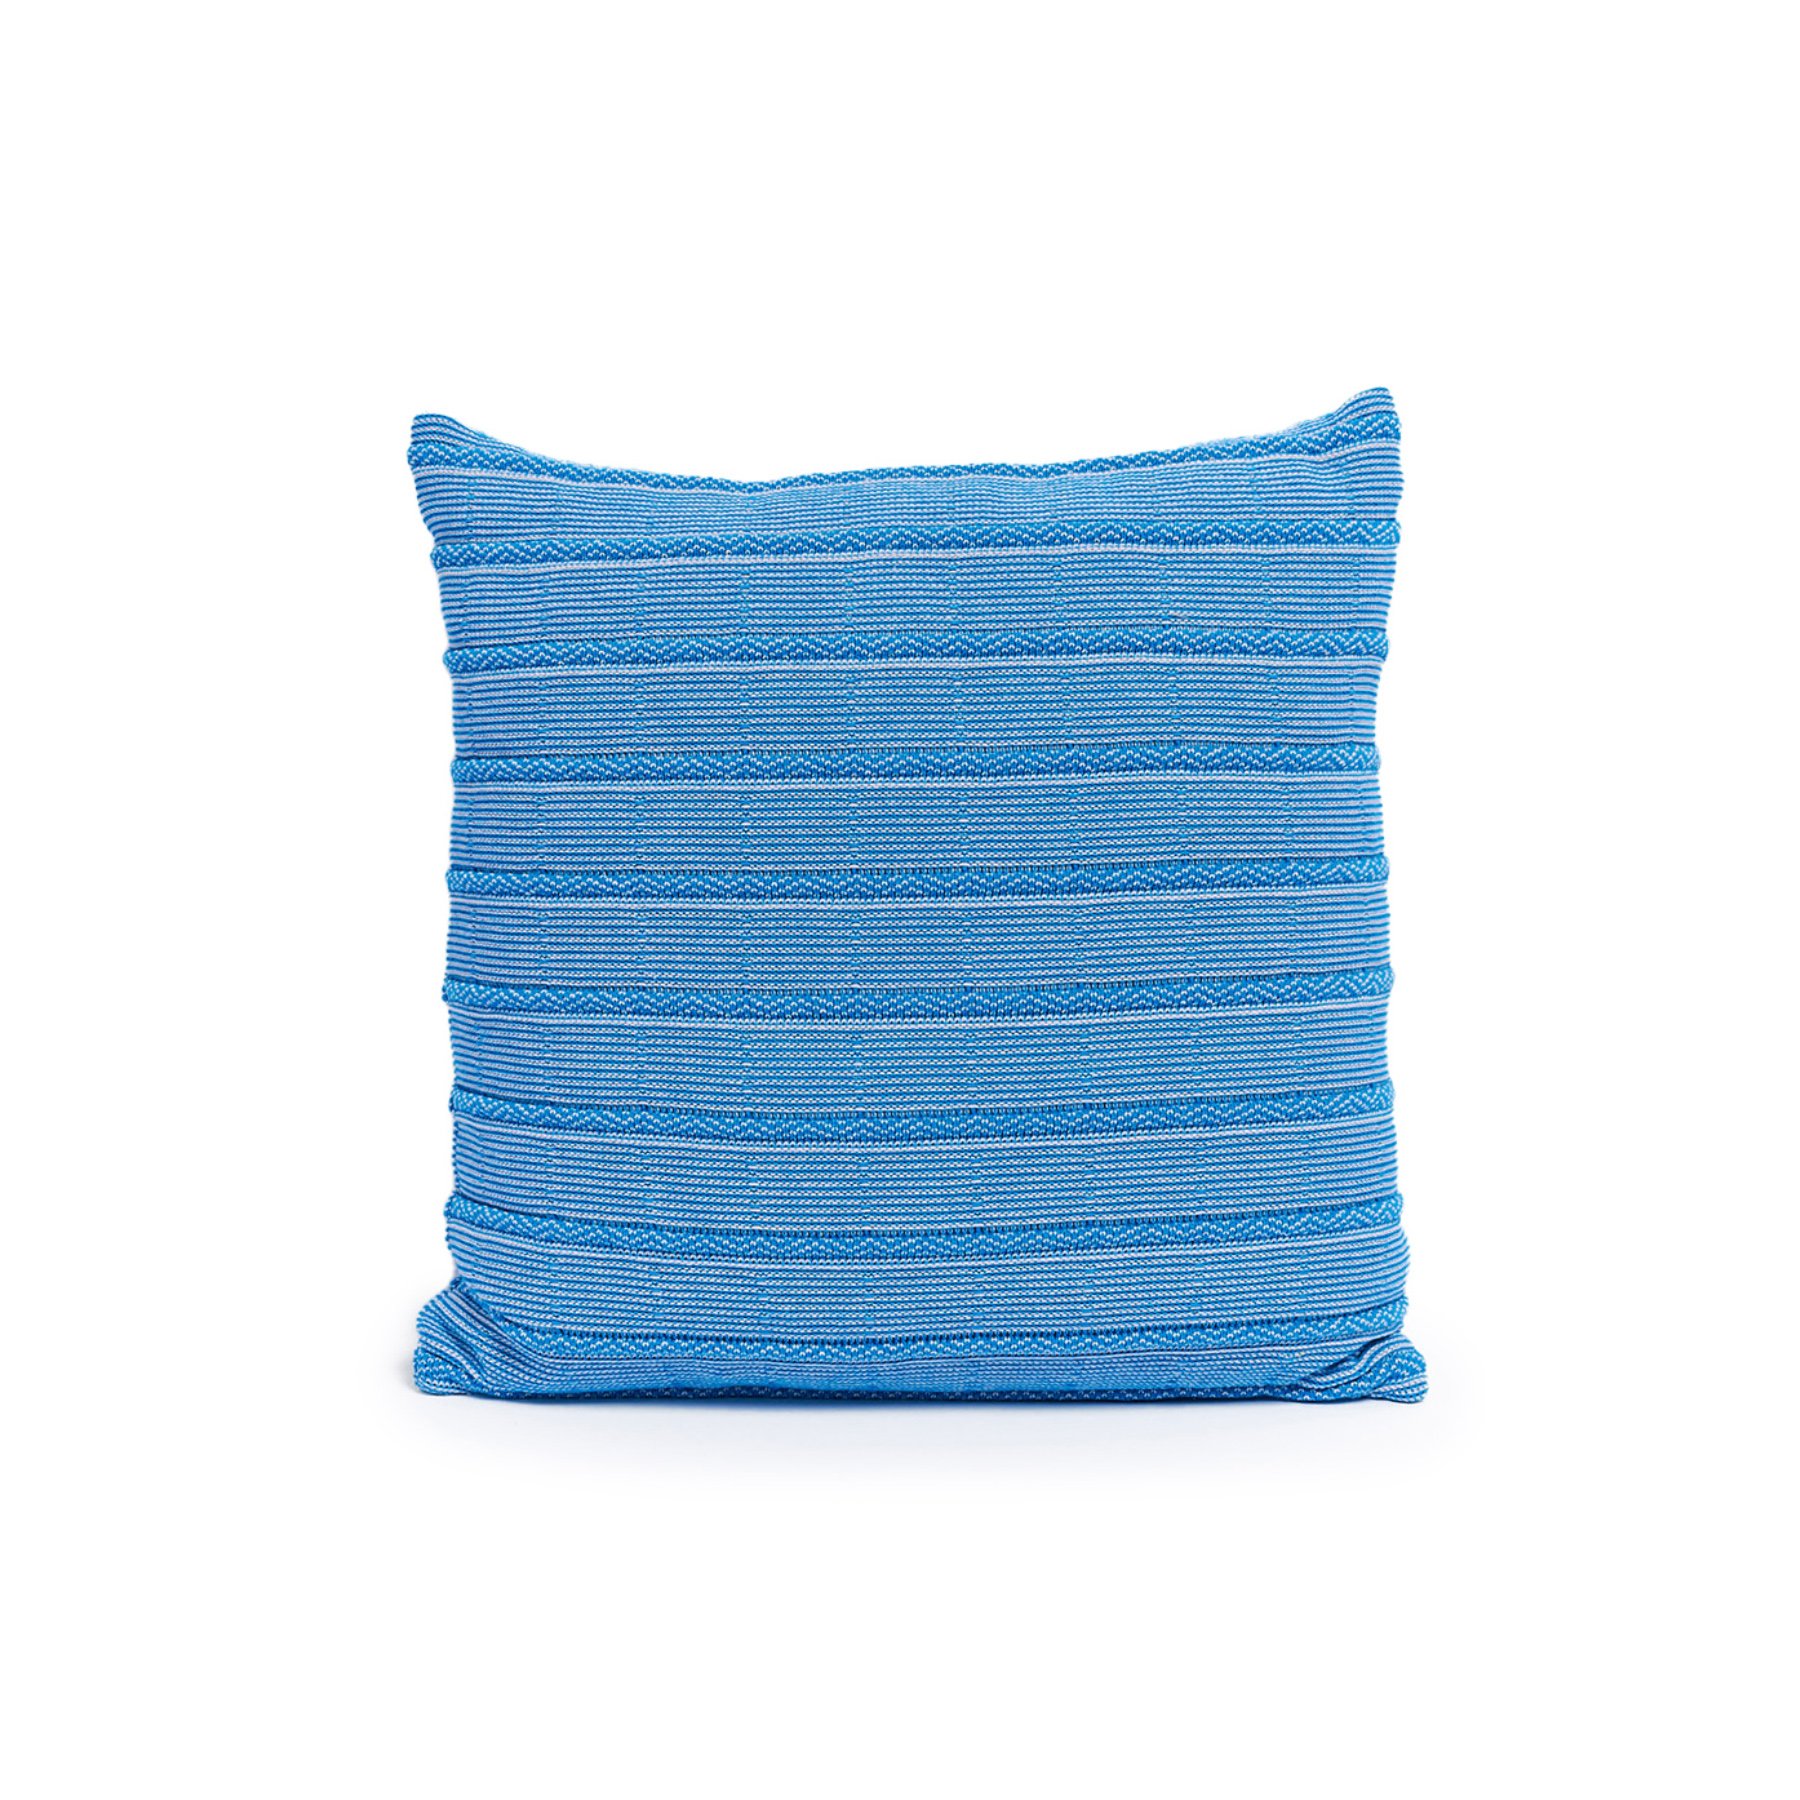 18x18" rolled texture pillow | greggio + turchese